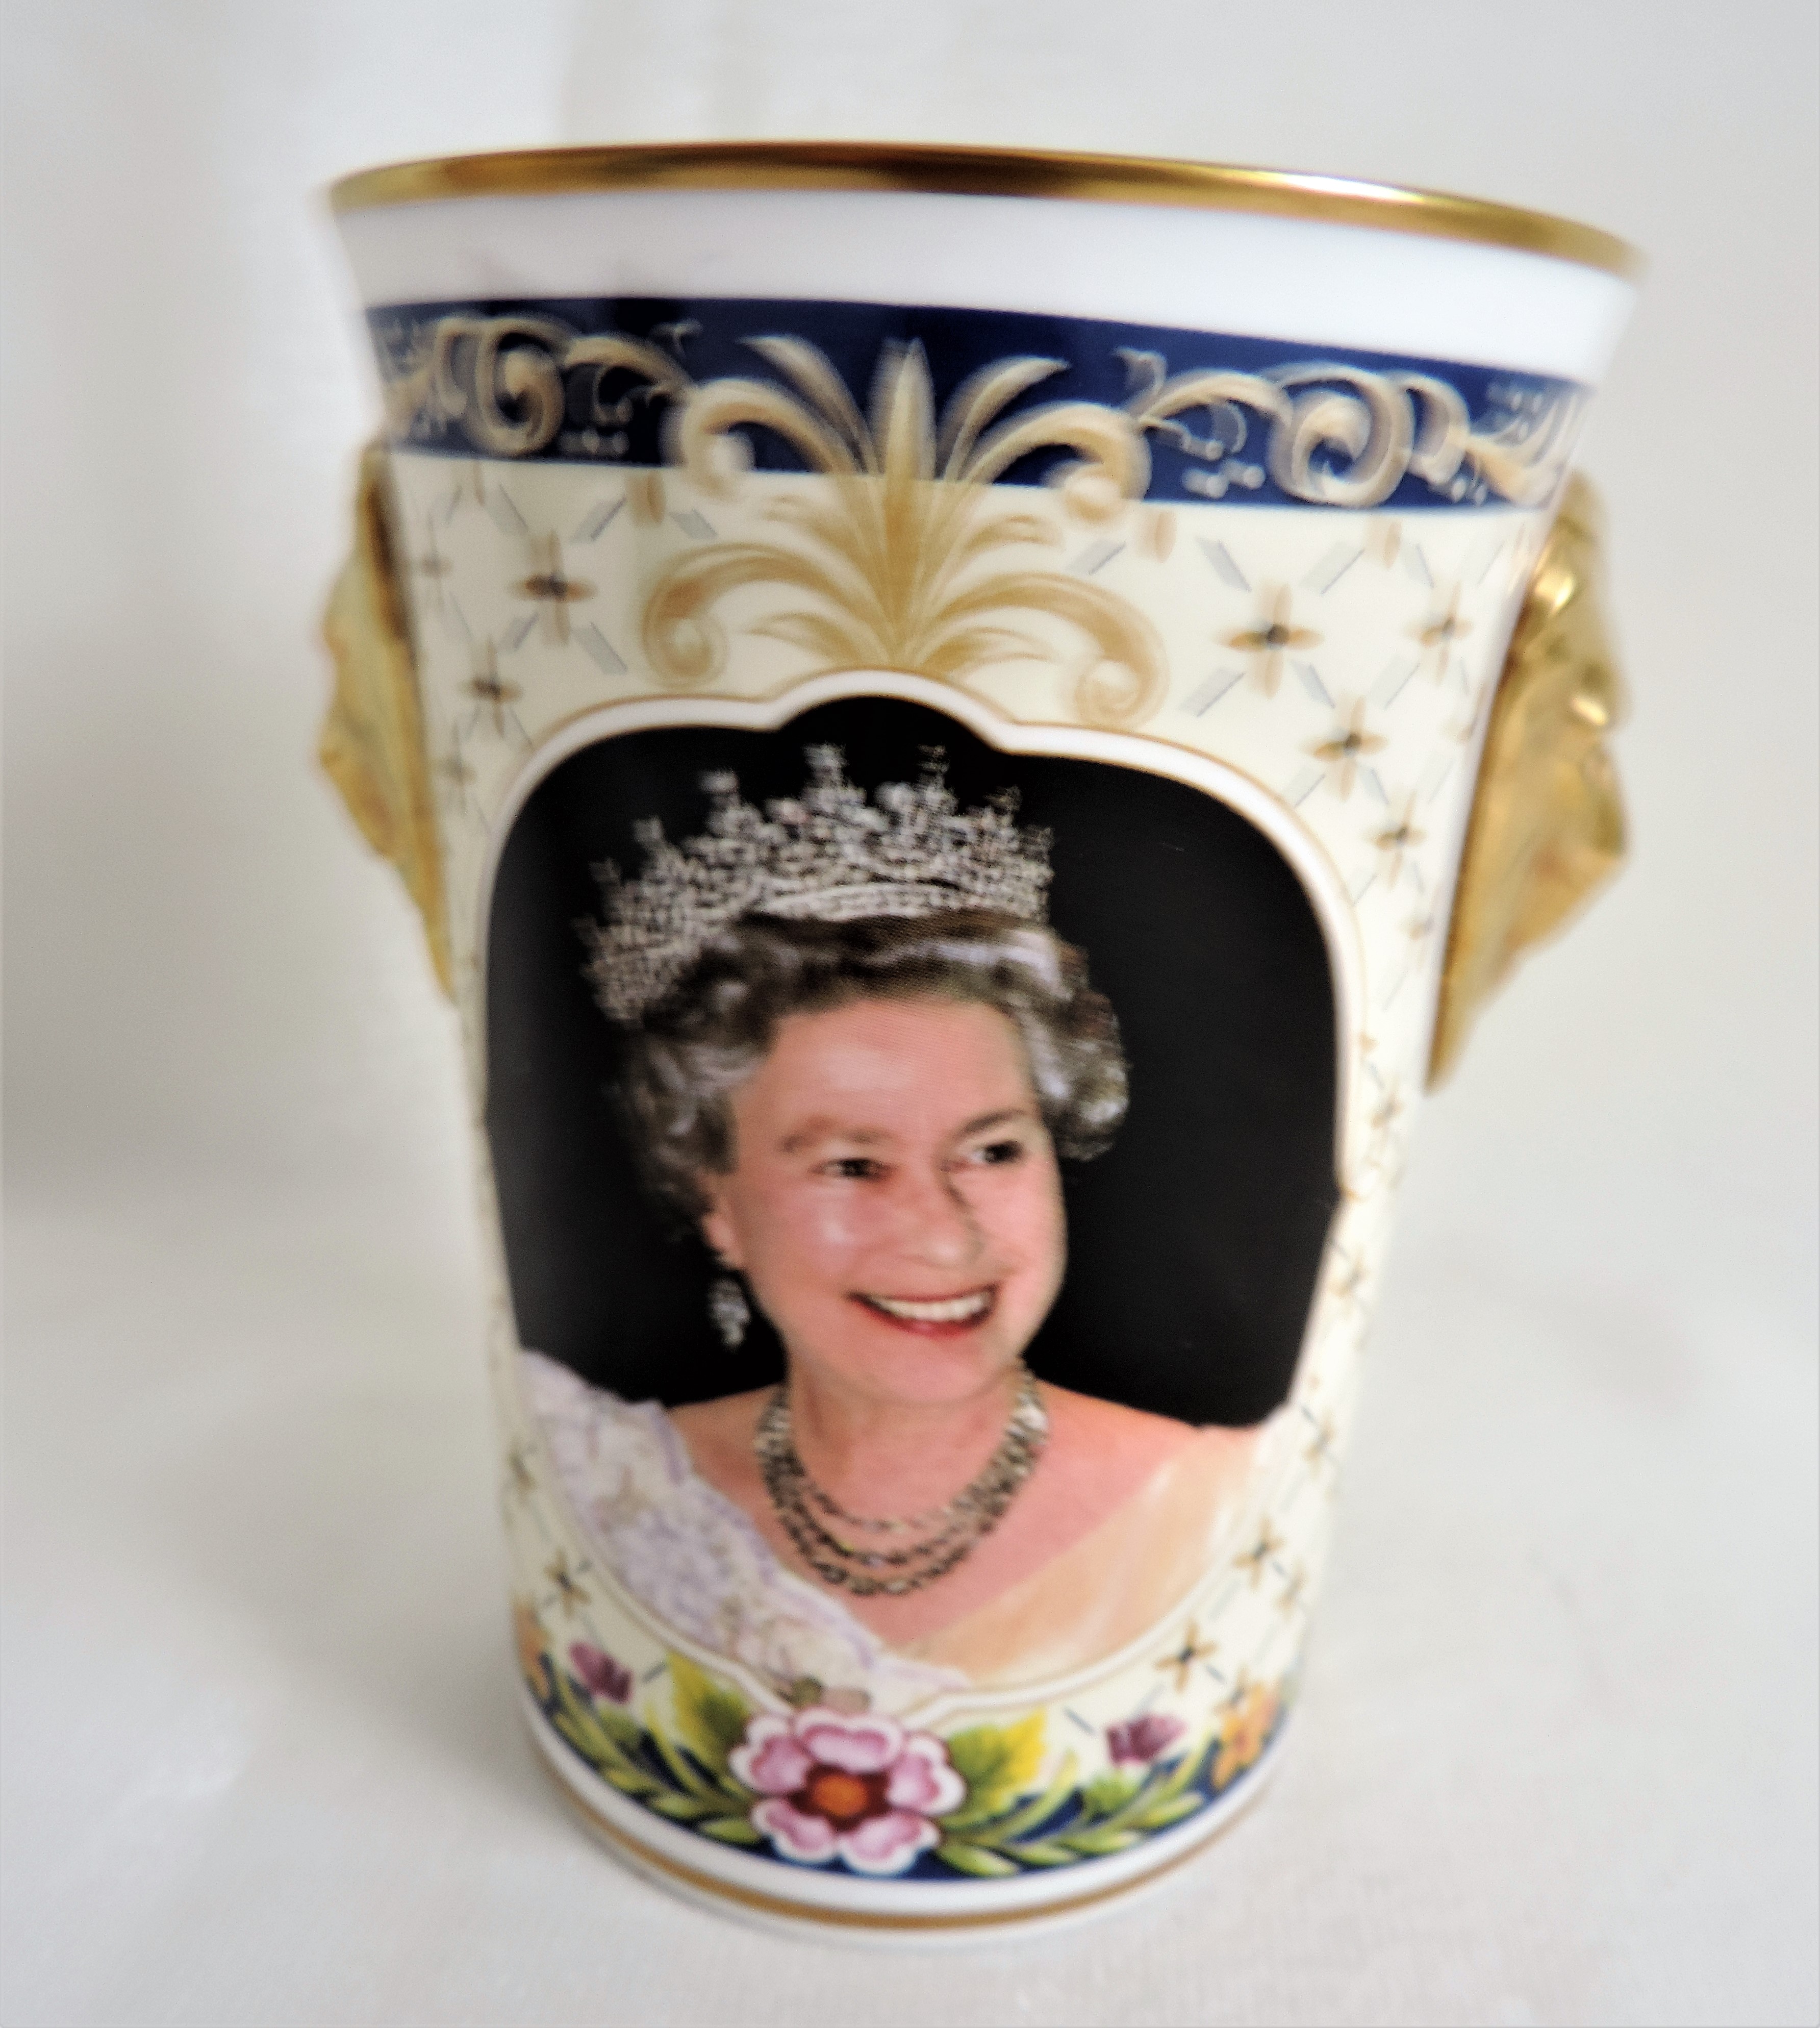 Caverswall Lion Mask Beaker 75th Birthday Tribute Queen Elizabeth II - Image 4 of 5